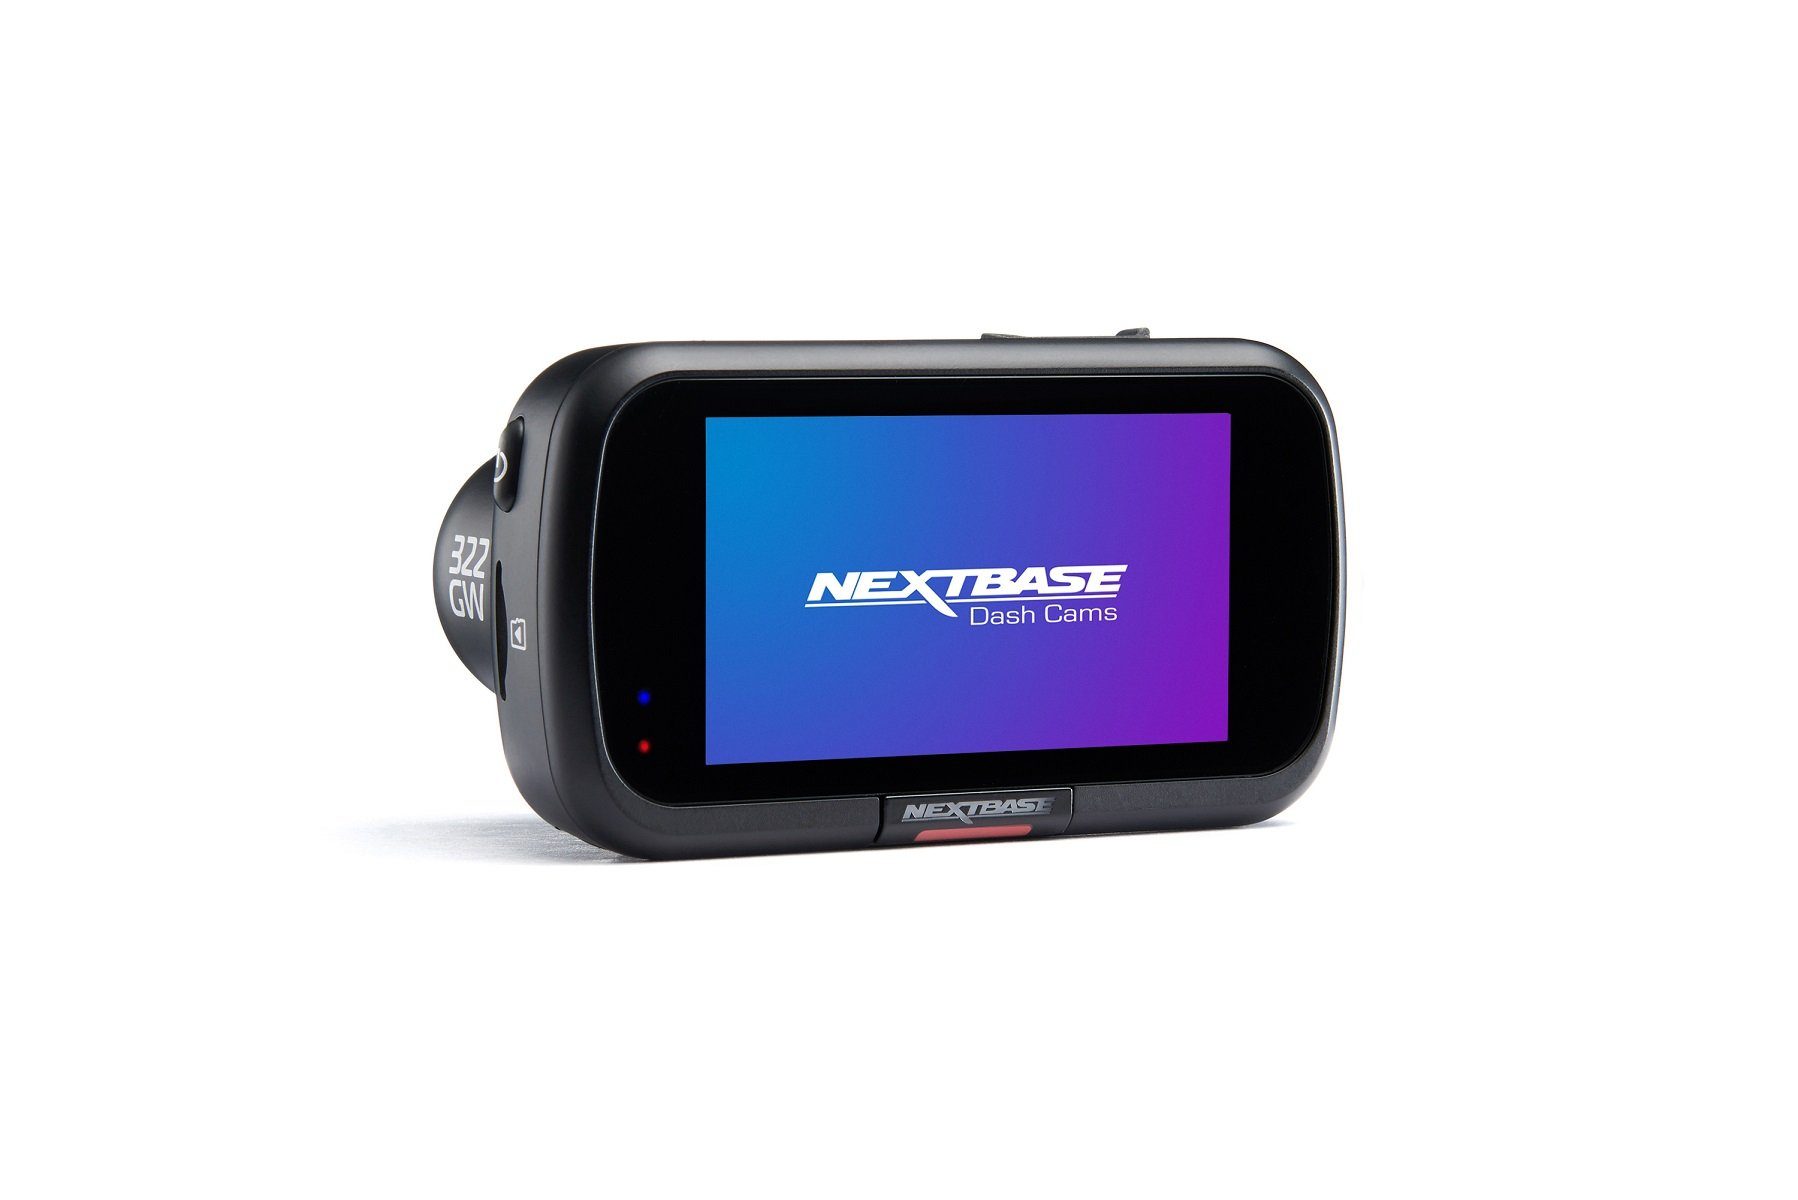 Limited Bundle Edition Nextbase Nextbase Dashcam 322